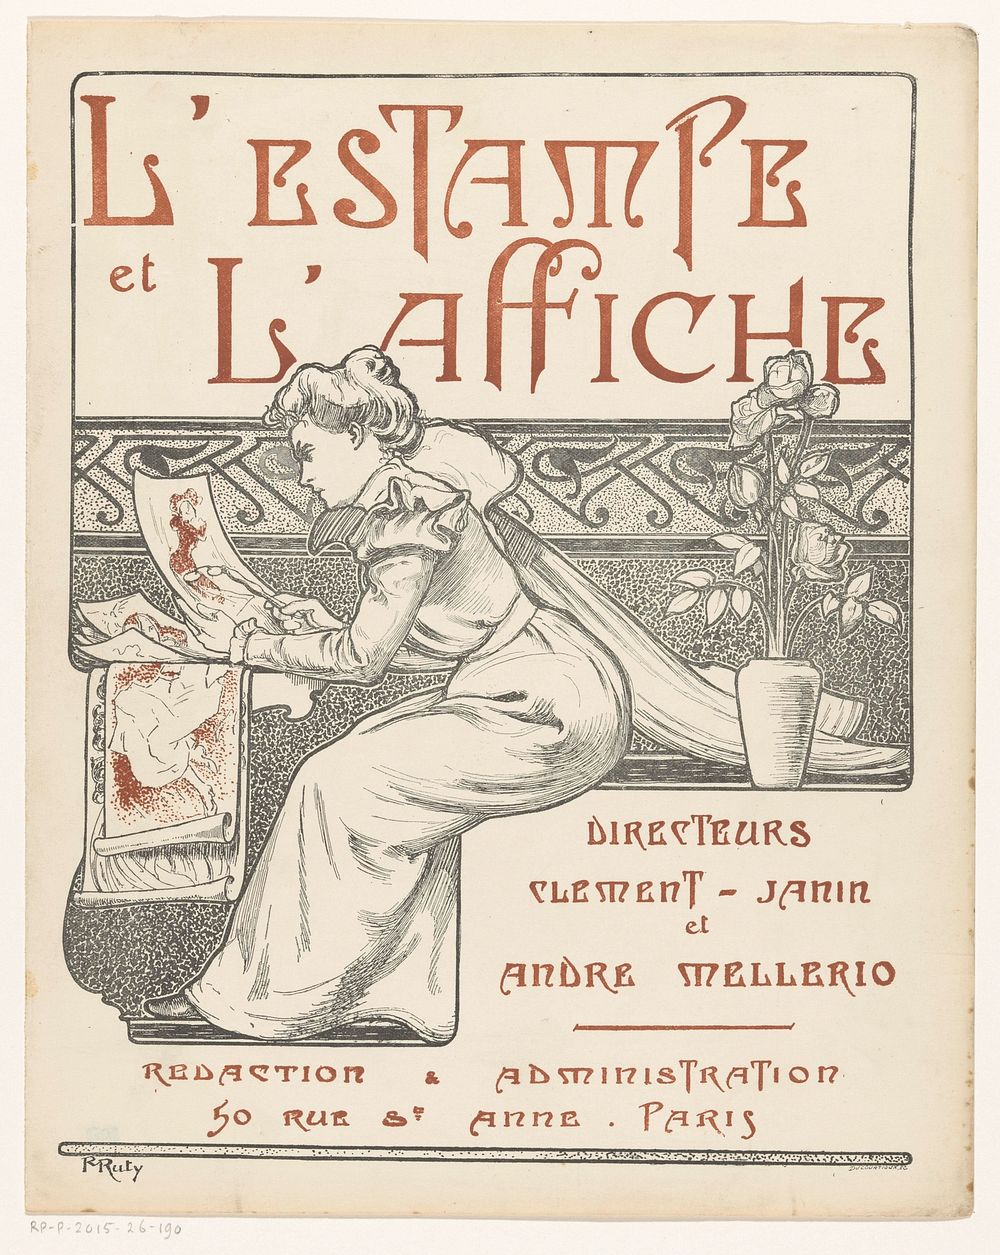 Omslag voor het tijdschrift L'Estampe et l'Affiche (1897 - 1899) by Ducourtioux and Paul Ruty